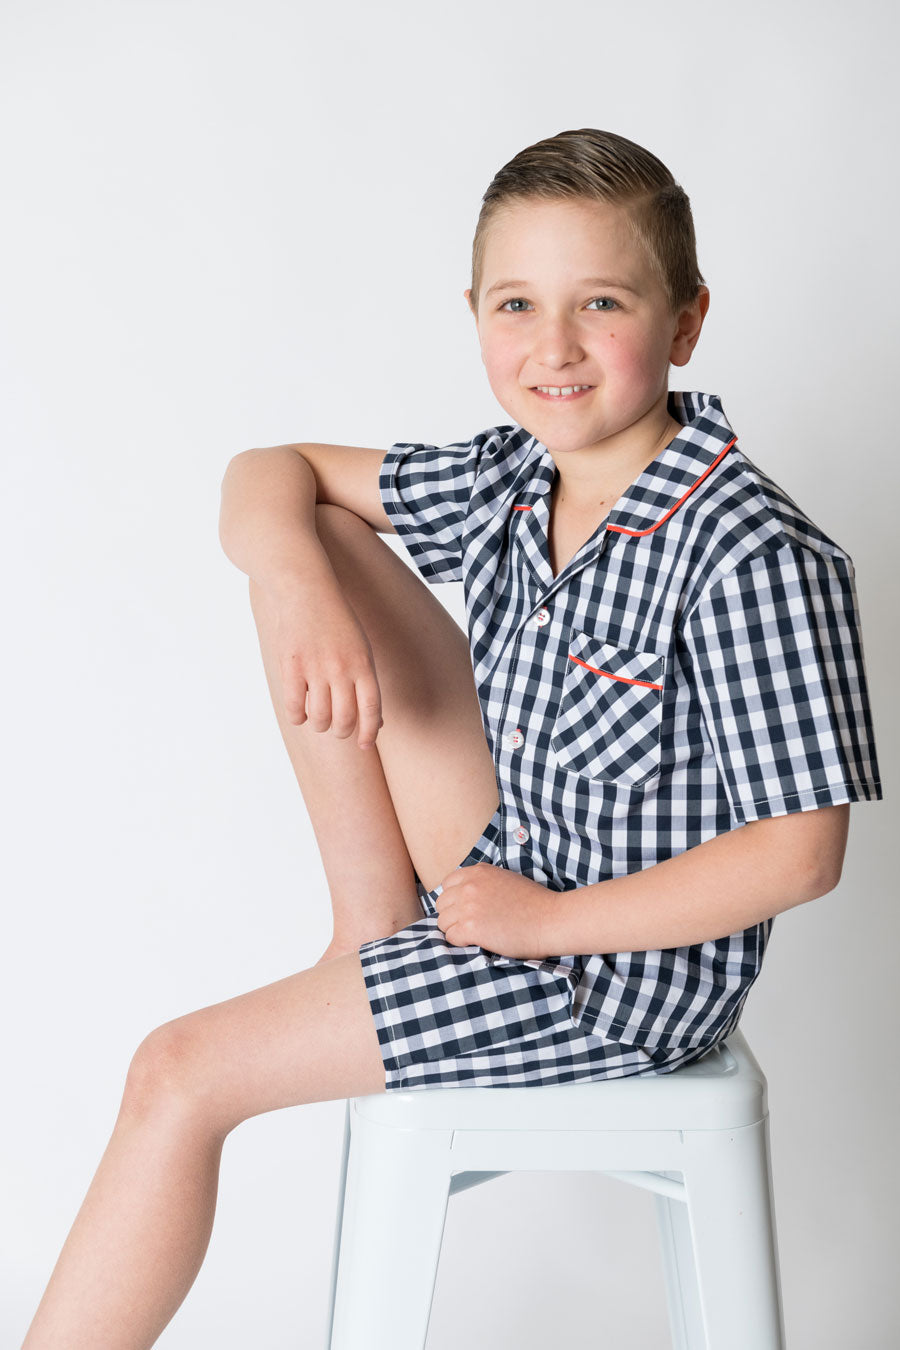 Boys 100% woven cotton summer pyjamas - Classic navy gingham check